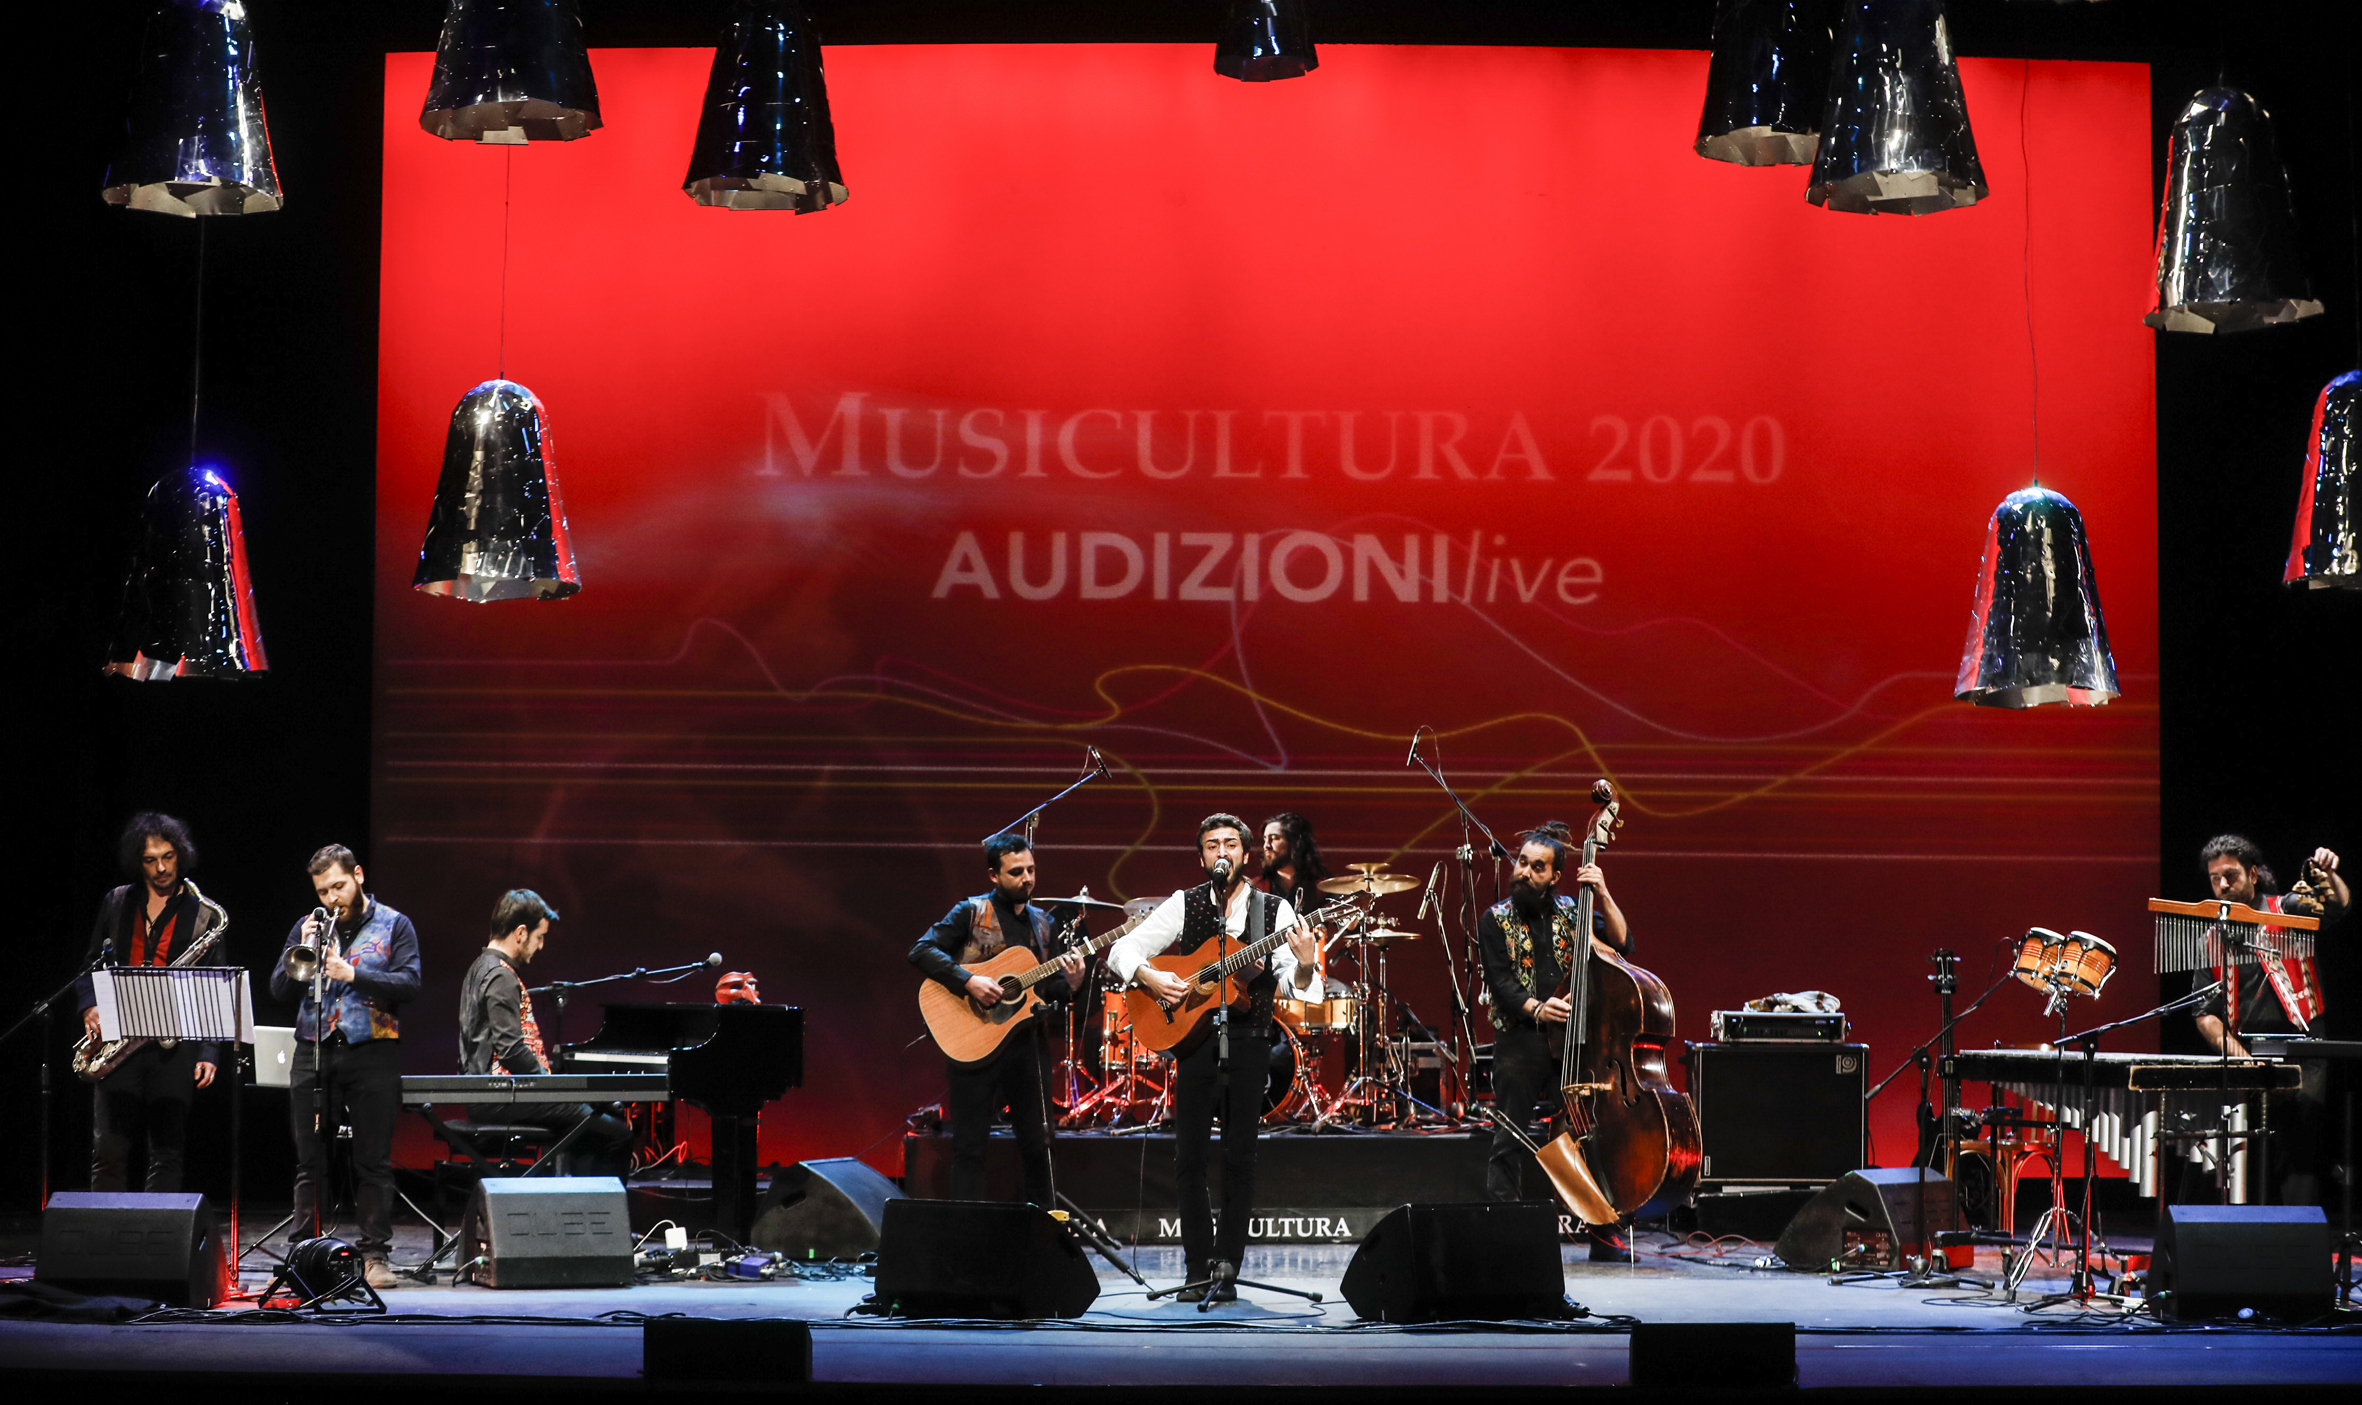 Musicultura, rinviate le audizioni live a Macerata